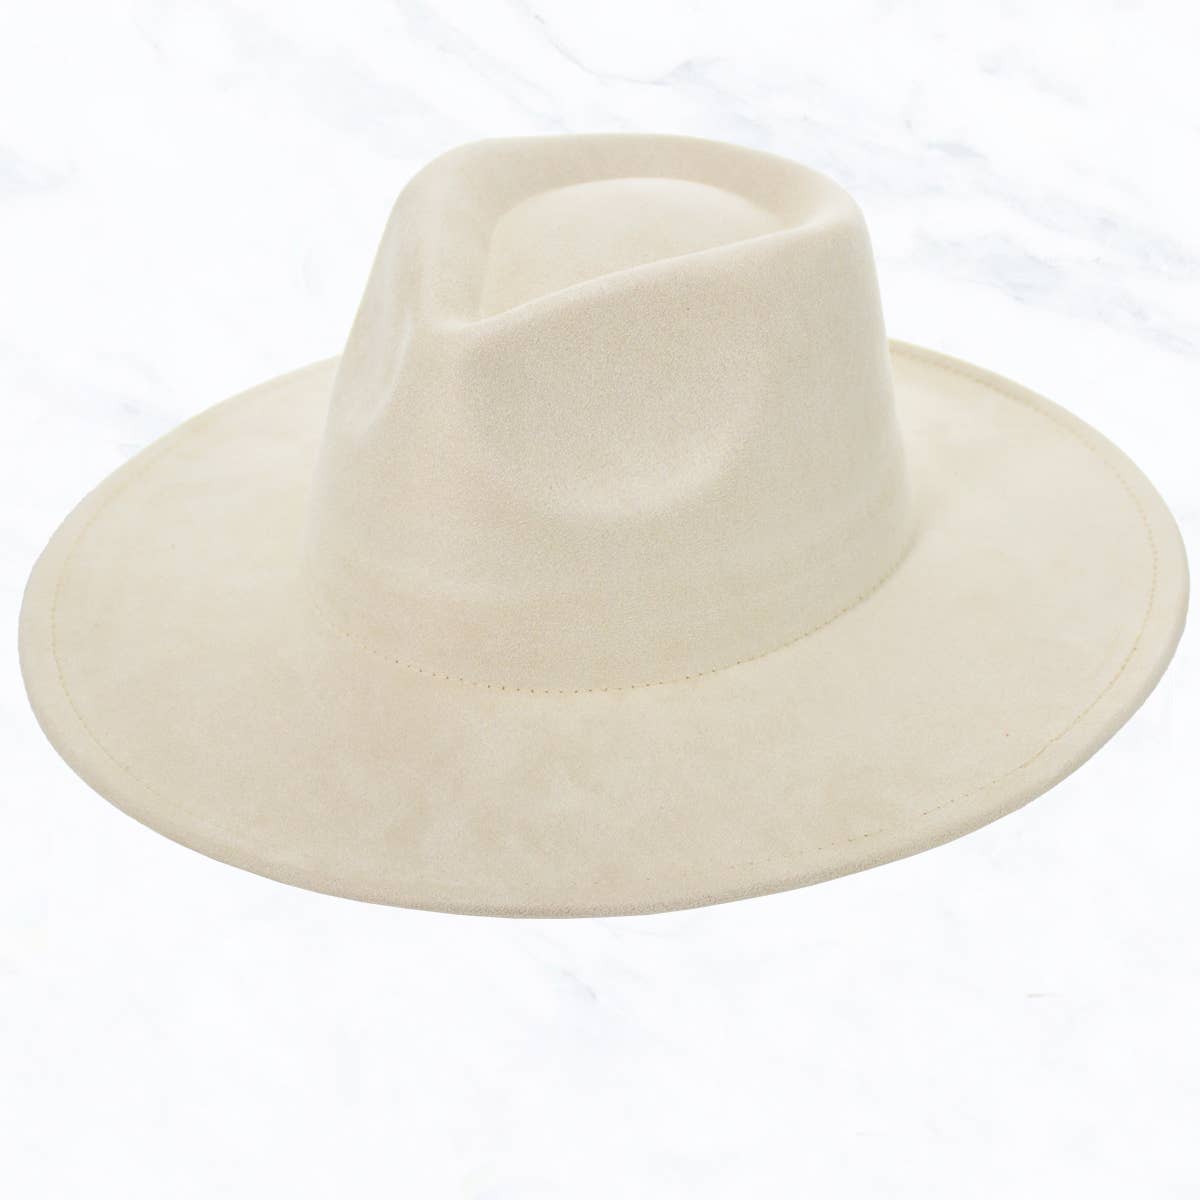 Suzie Q USA - Suede Large Eaves Teardrop Top Fedora Hat: New Beige